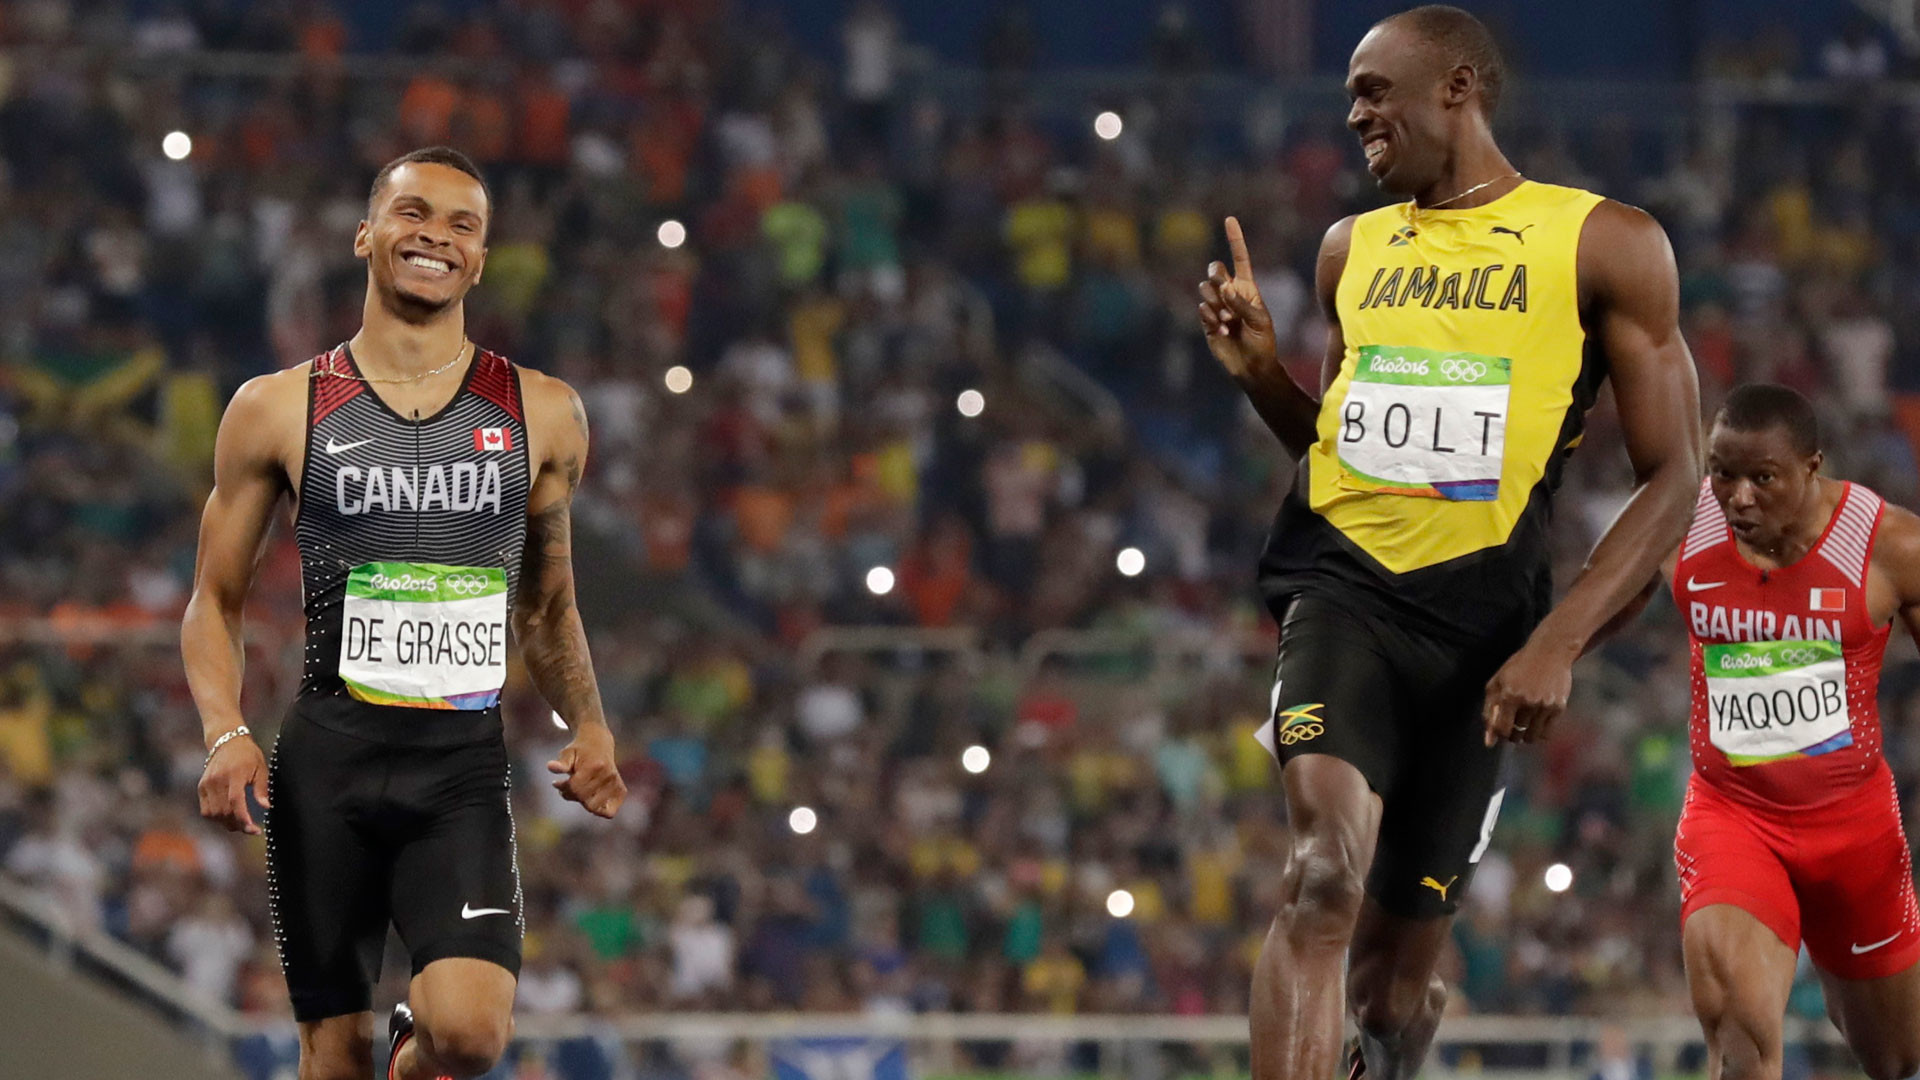 1920x1080 Posnanski: Usain Bolt's big smile does not tell the full story | NBC  Olympics